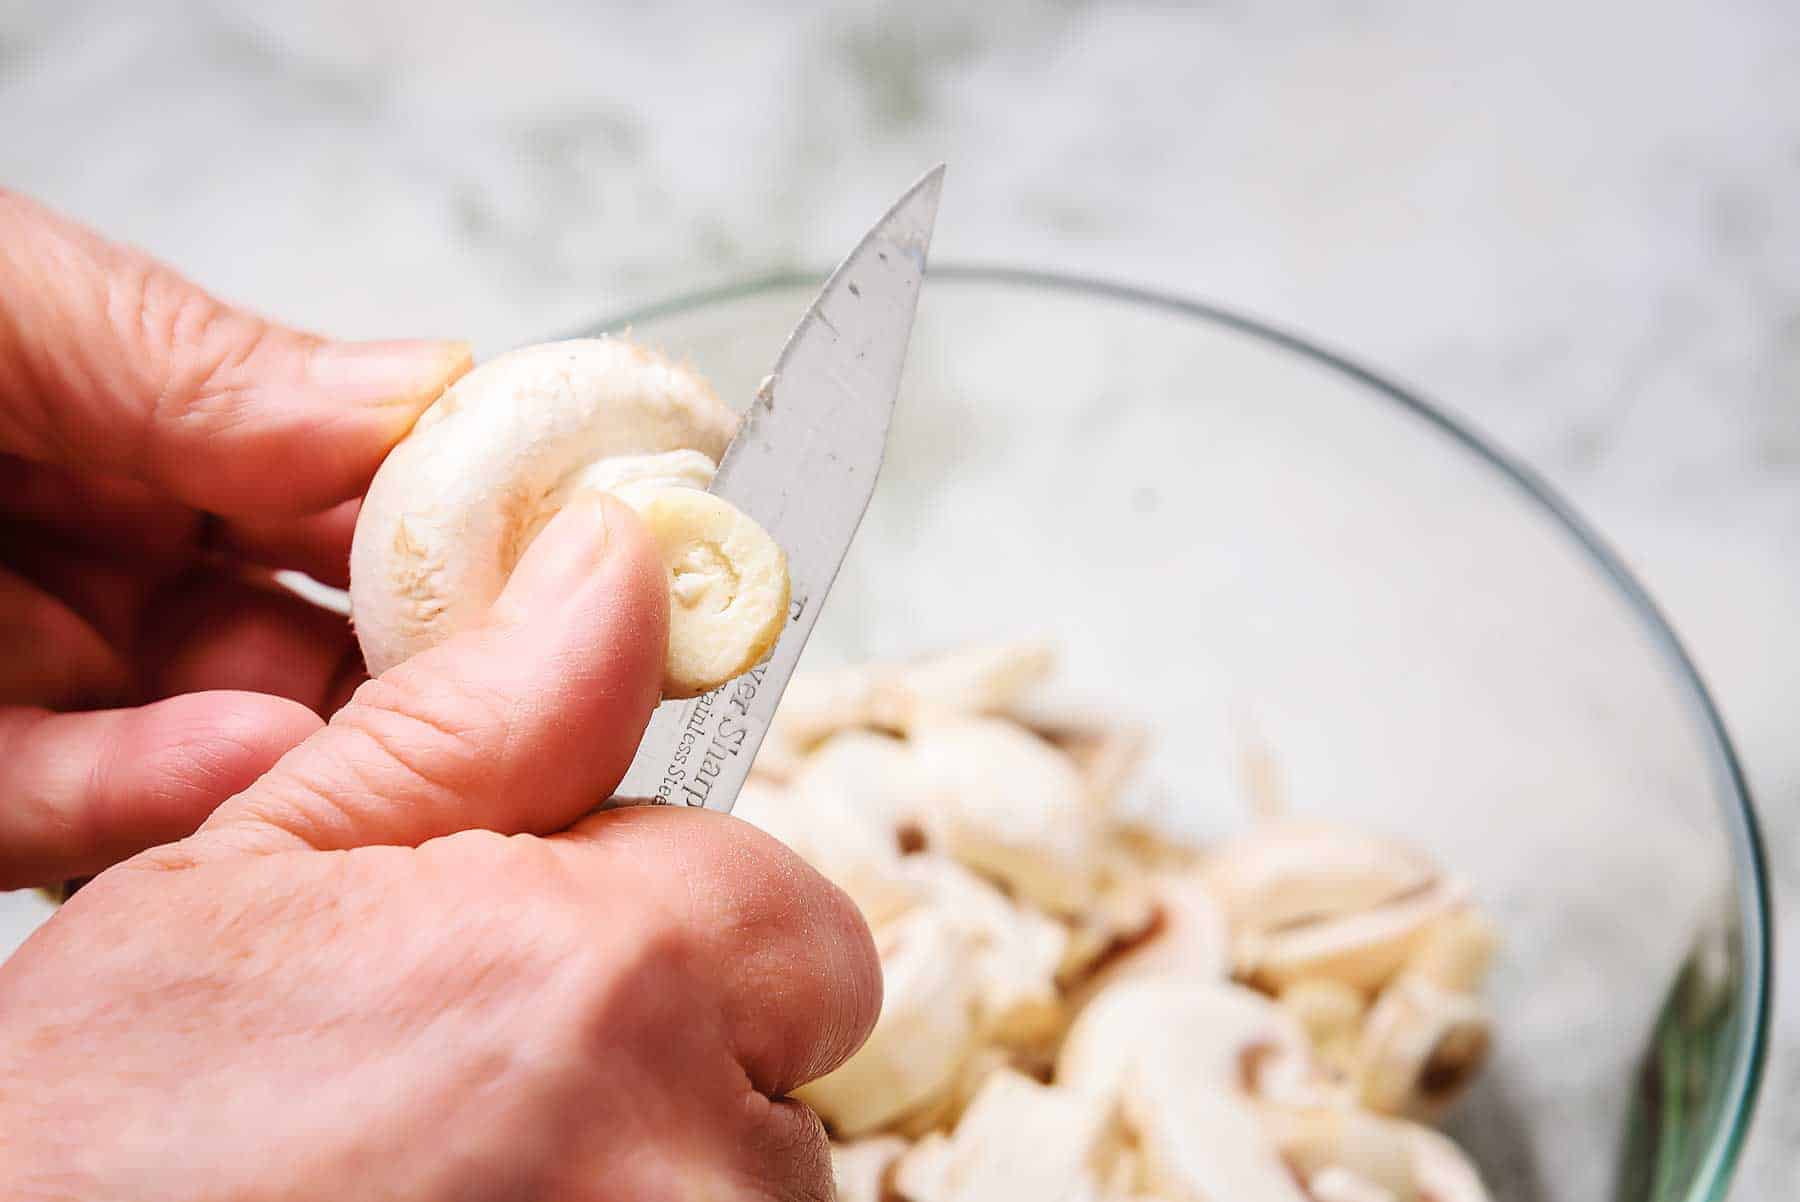 Slicing the mushrooms